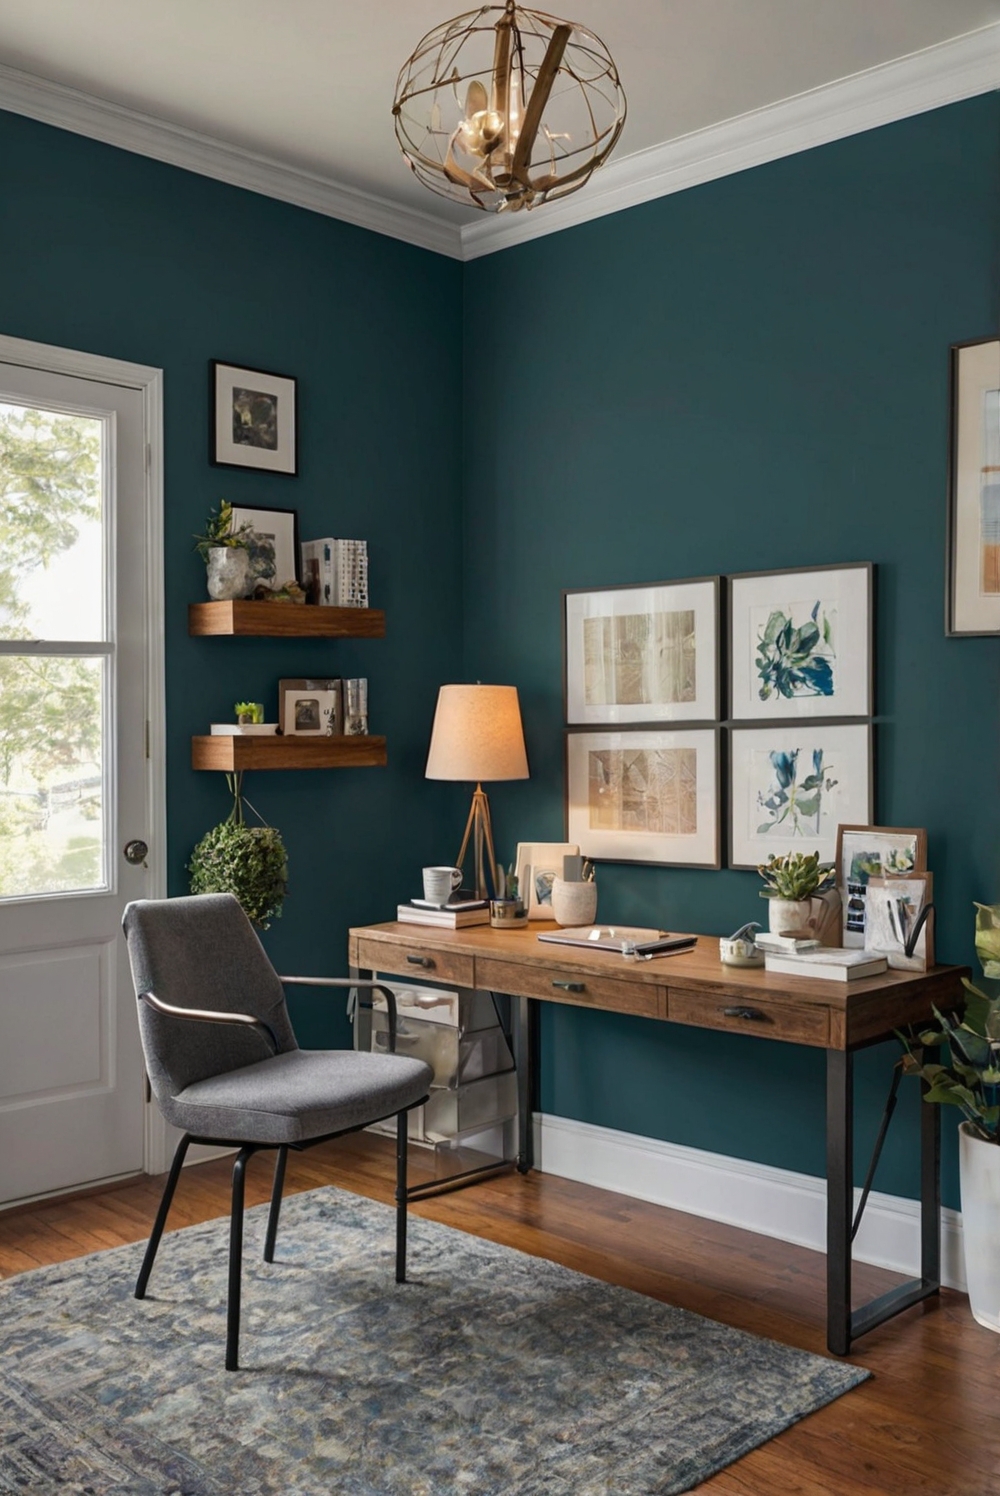 paint color consultation, interior color scheme, home office color ideas, wall paint transition